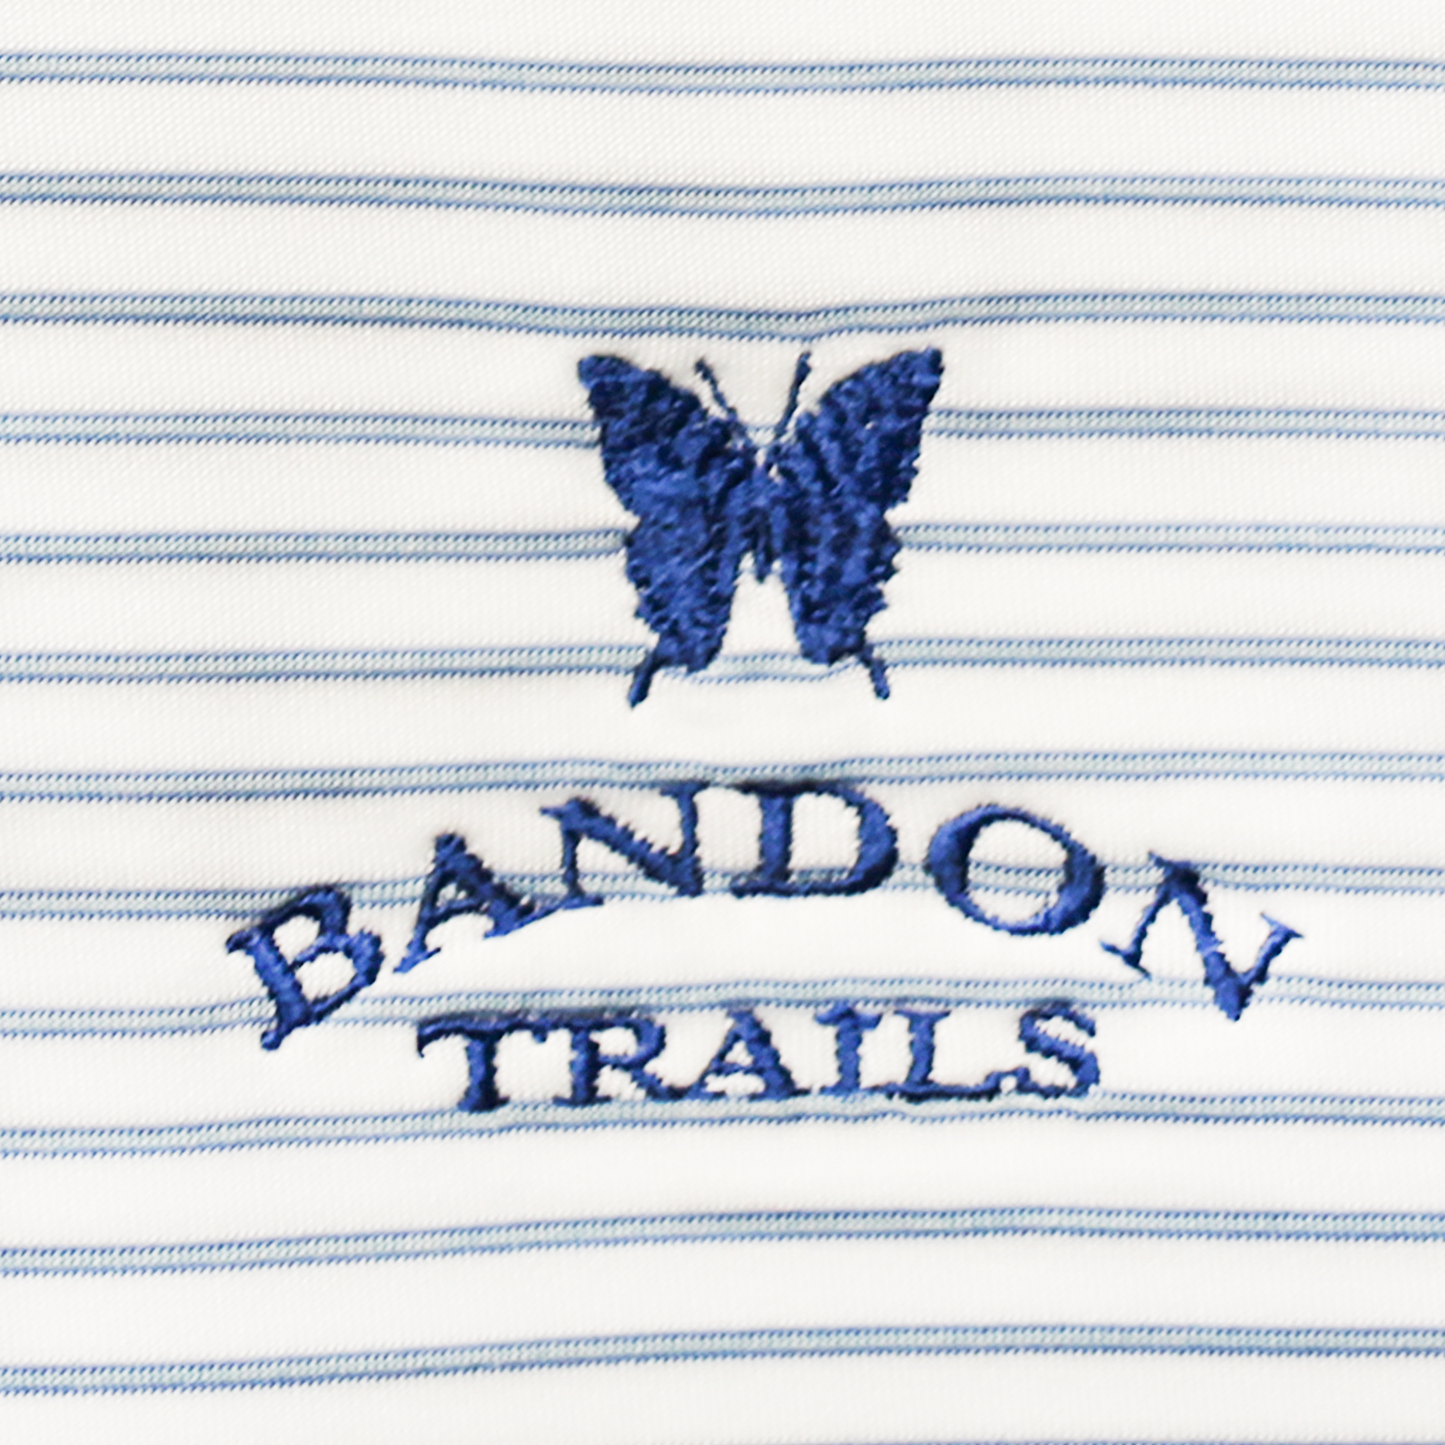 Michael Striped - Bandon Trails